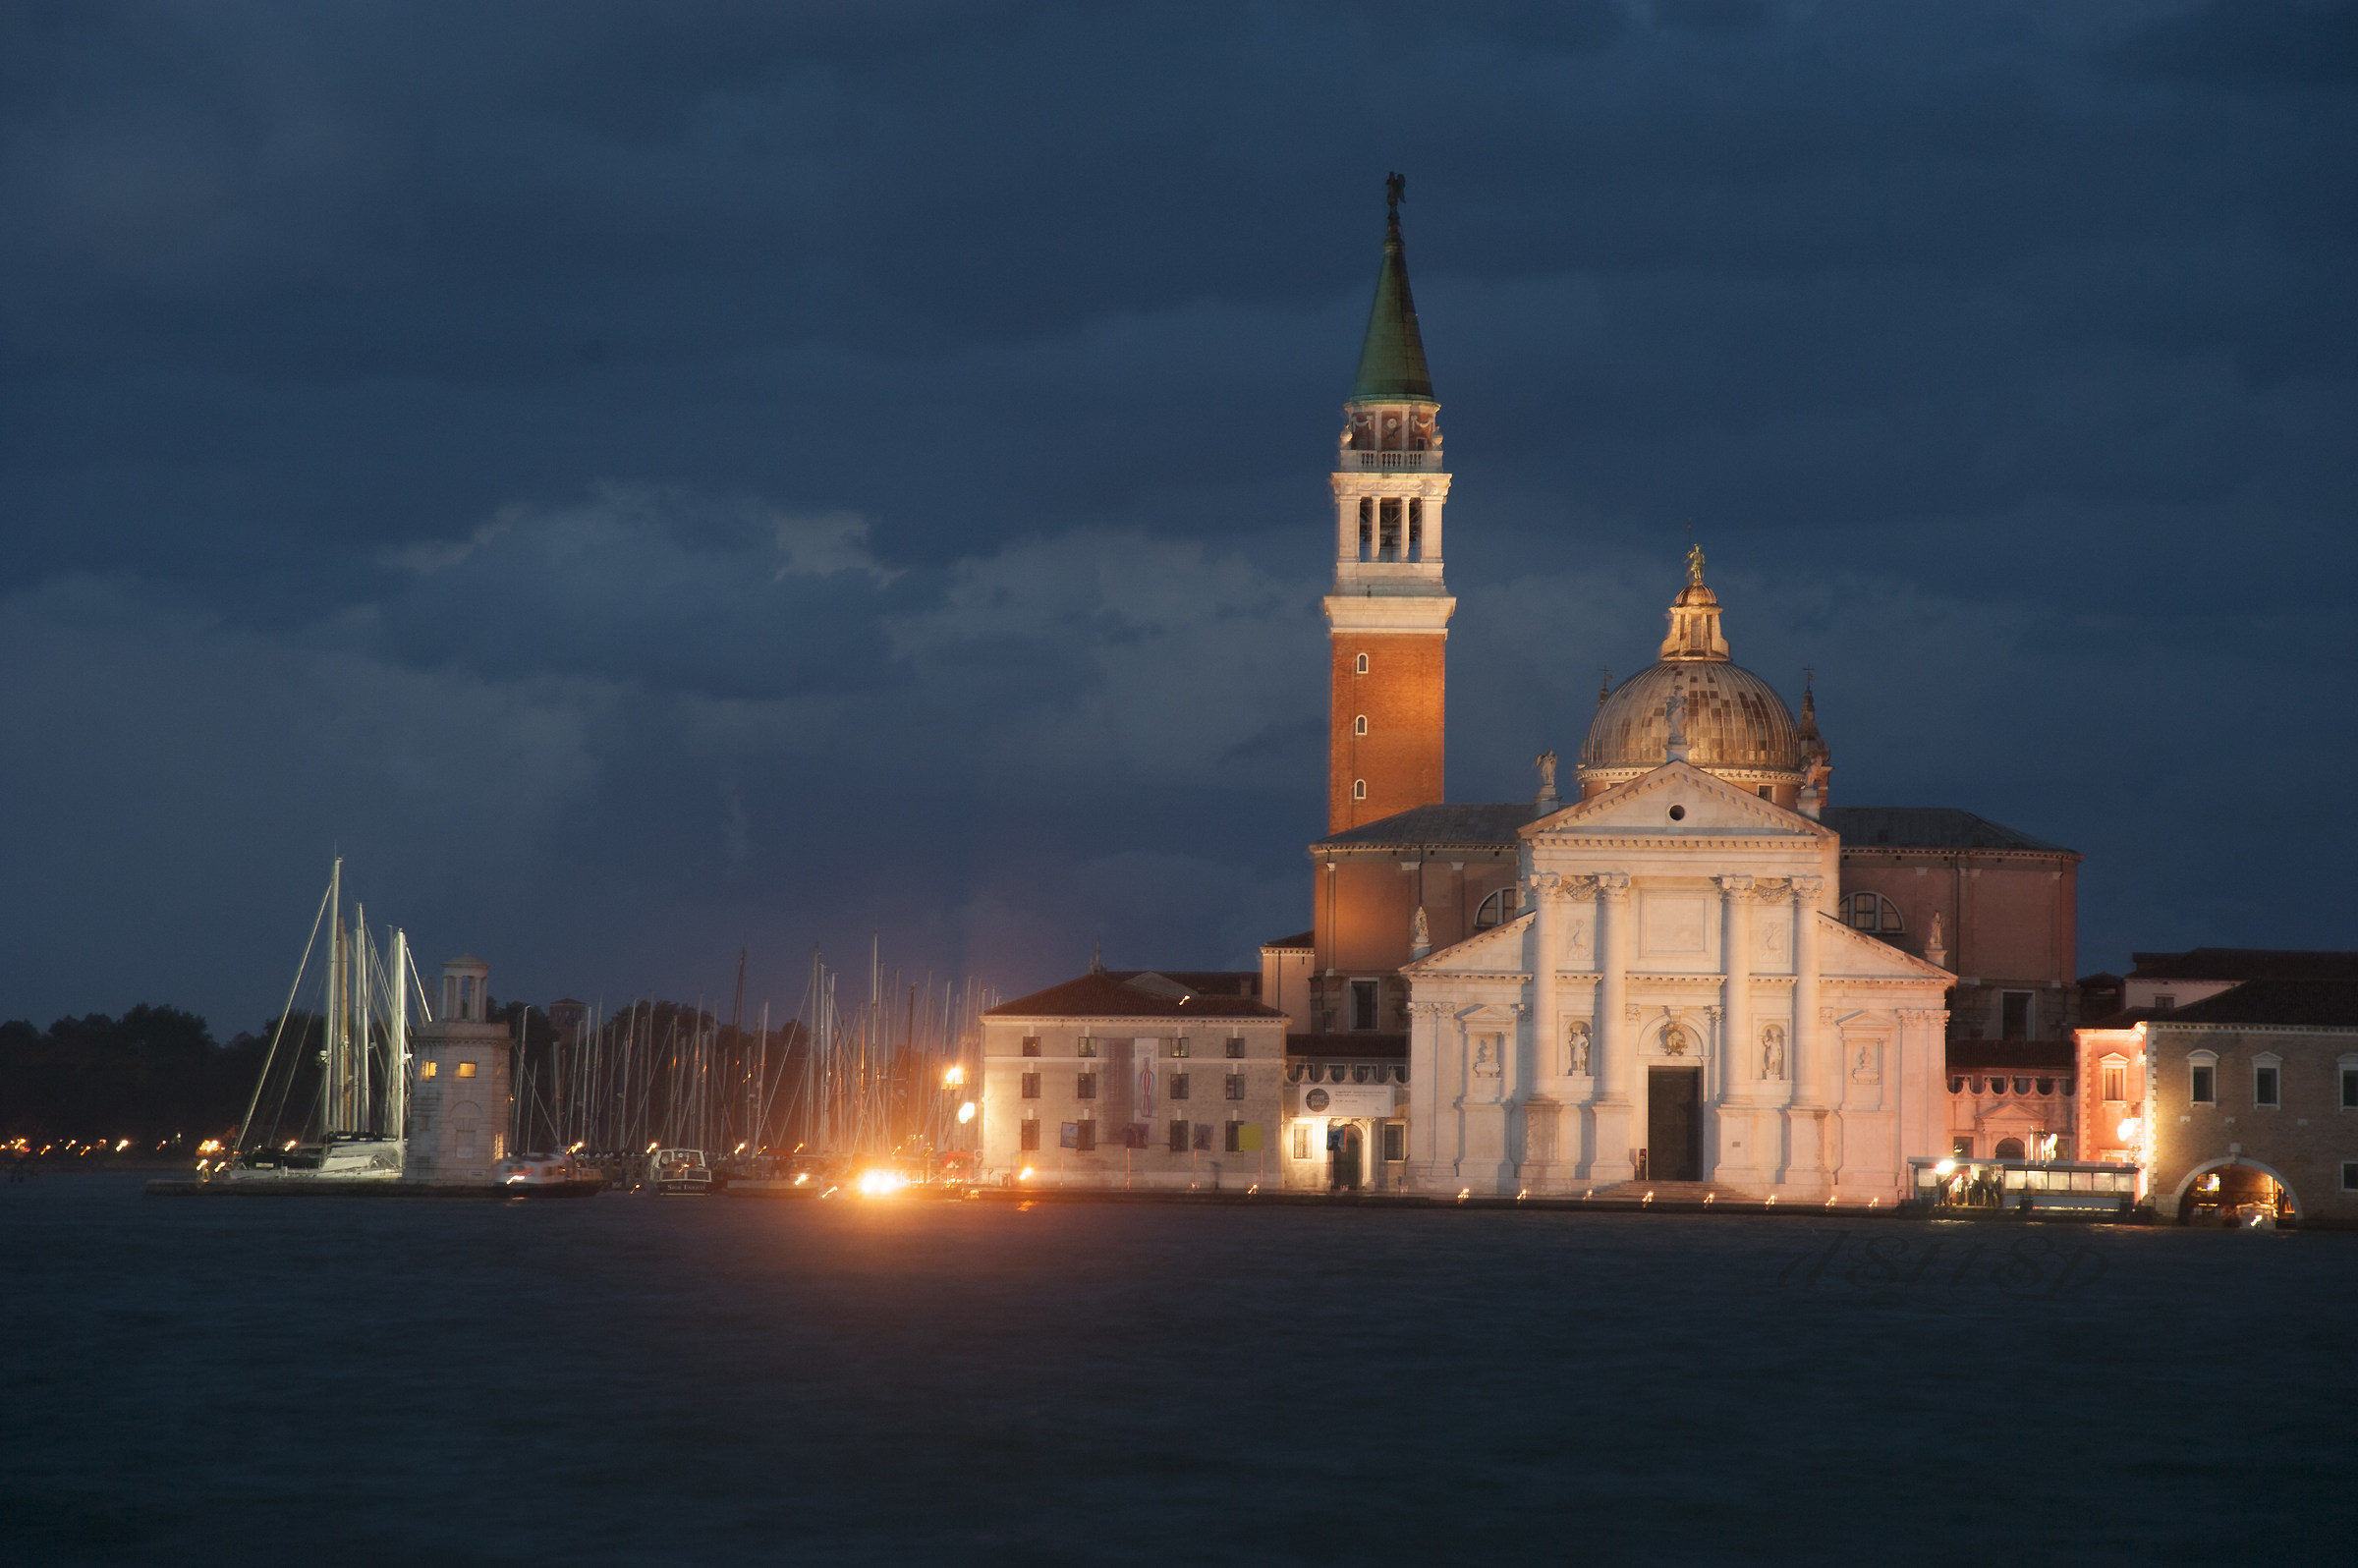 lights in Venice...